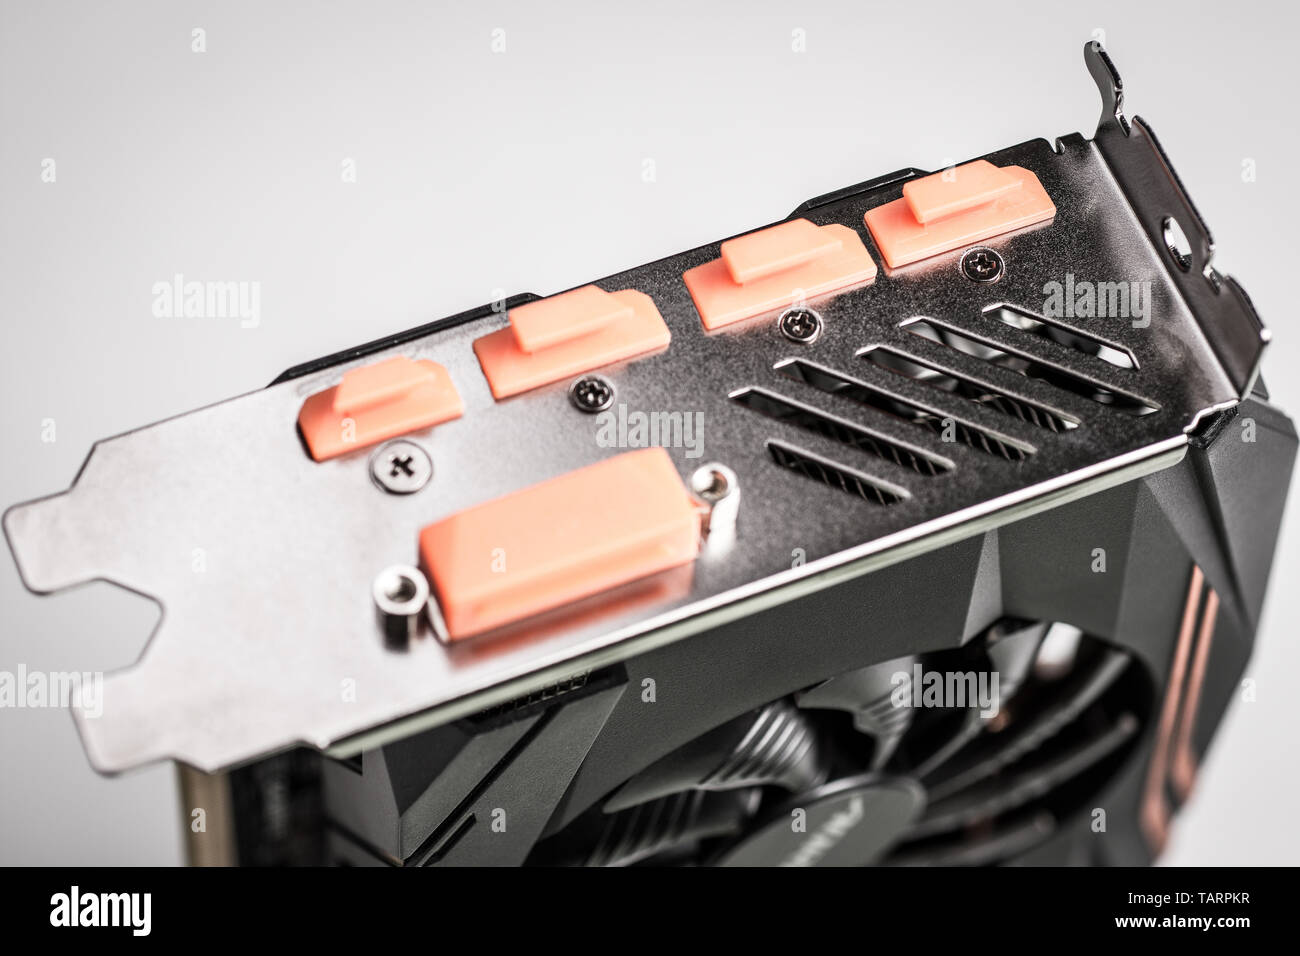 Professional PC Gaming Graphic Card GPU with DVI, HDMI Displayport Connectors Stock Photo